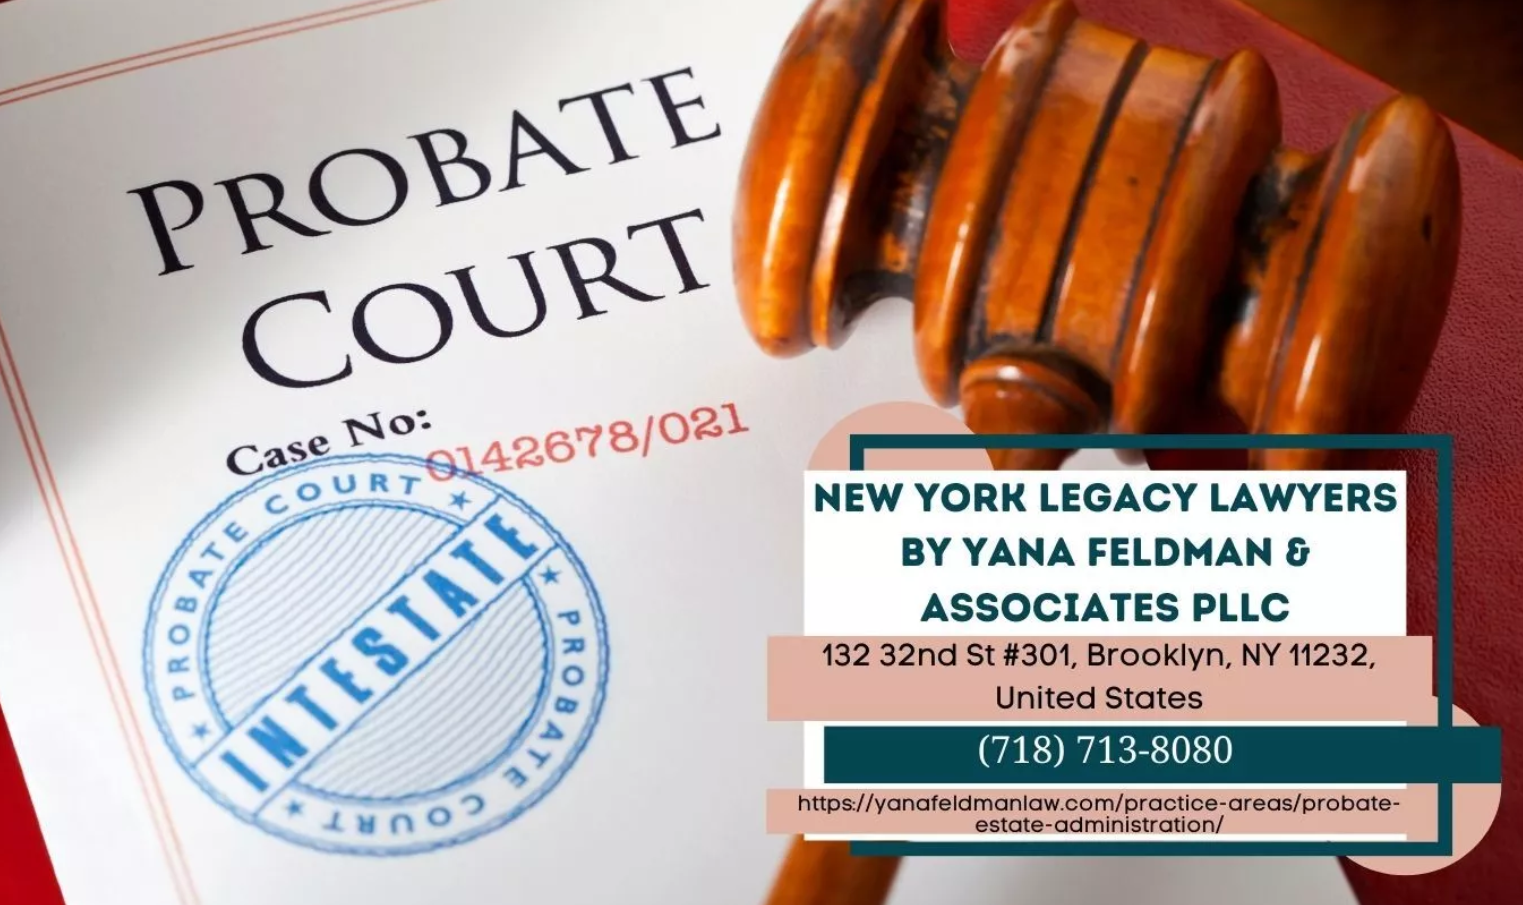 Brooklyn Probate Lawyer Yana Feldman of New York Legacy Attorneys Releases Thorough Information to Estate Administration